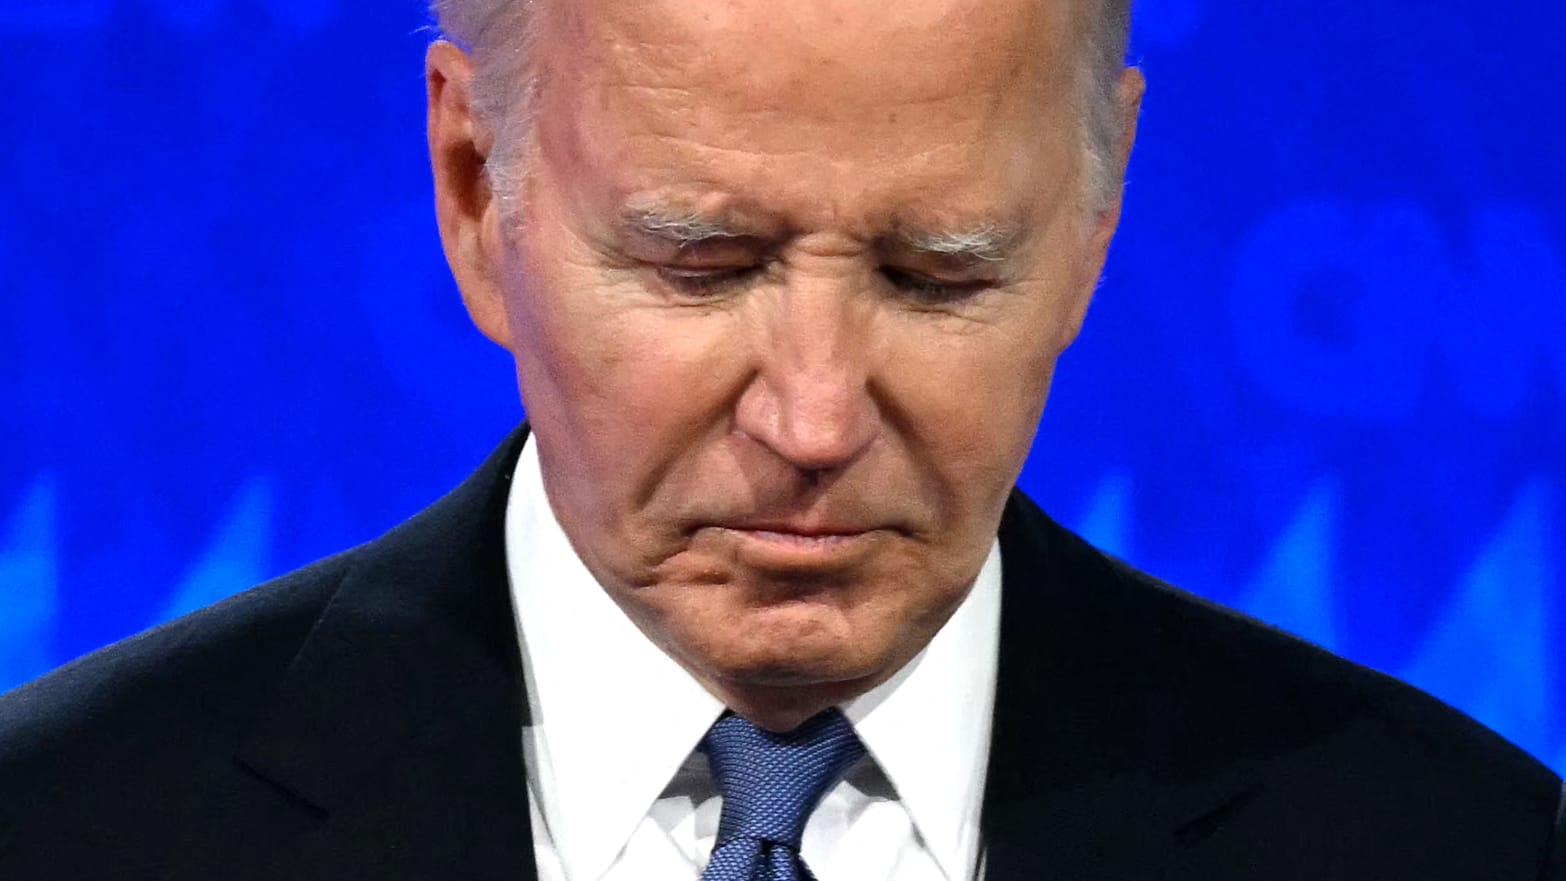 U.S. President Joe Biden looks down as he participates in the first presidential debate